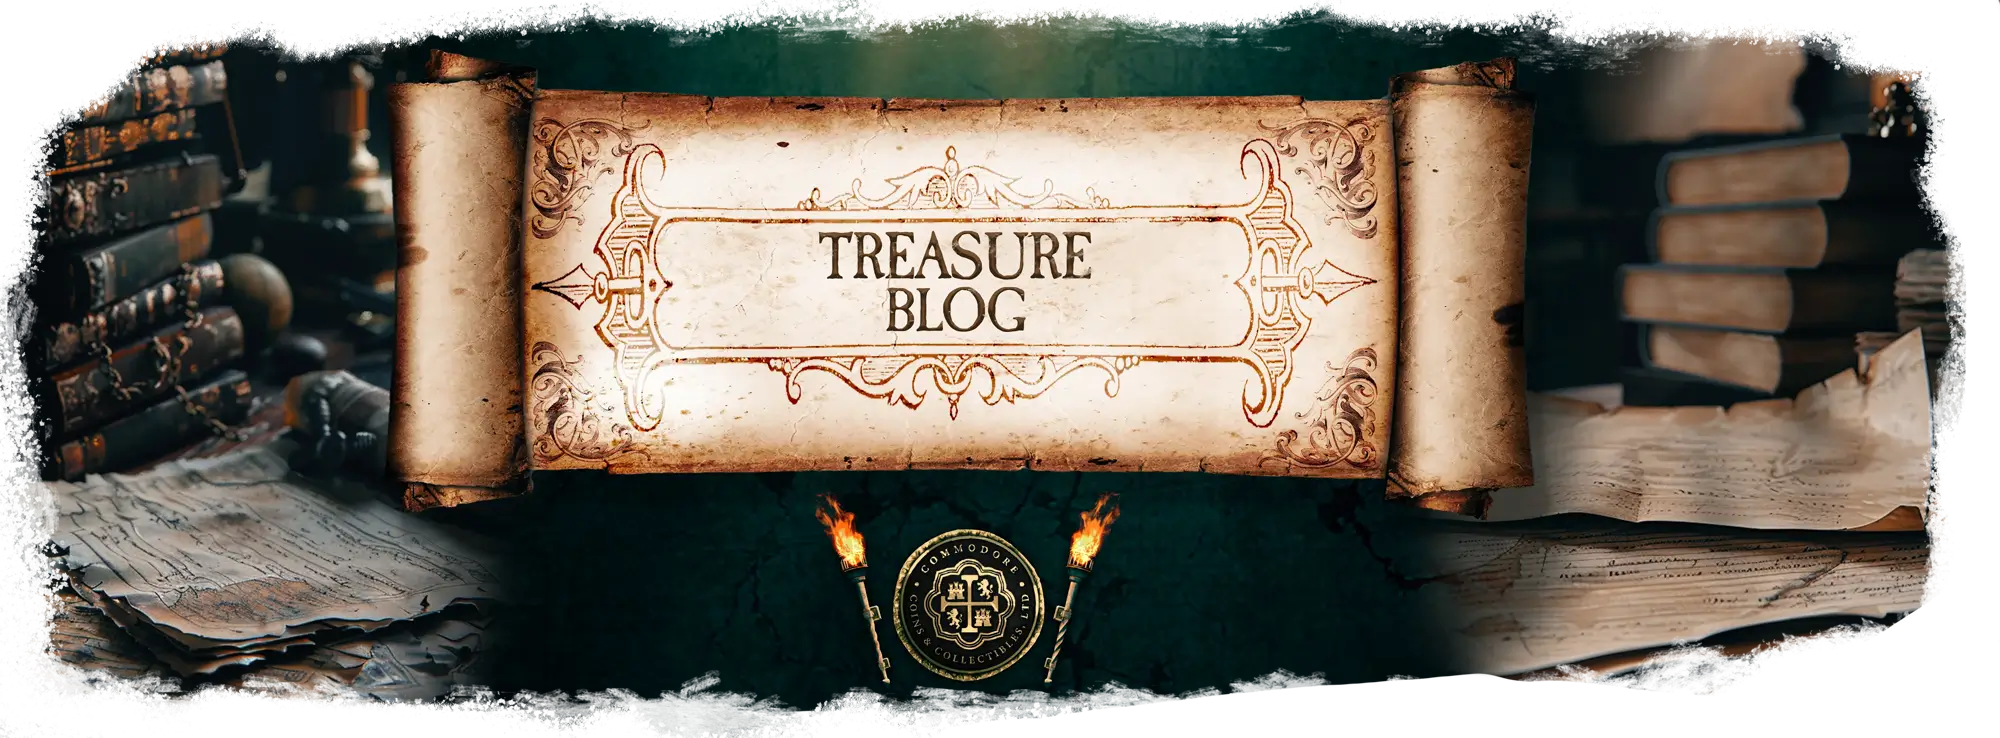 Treasure Blog